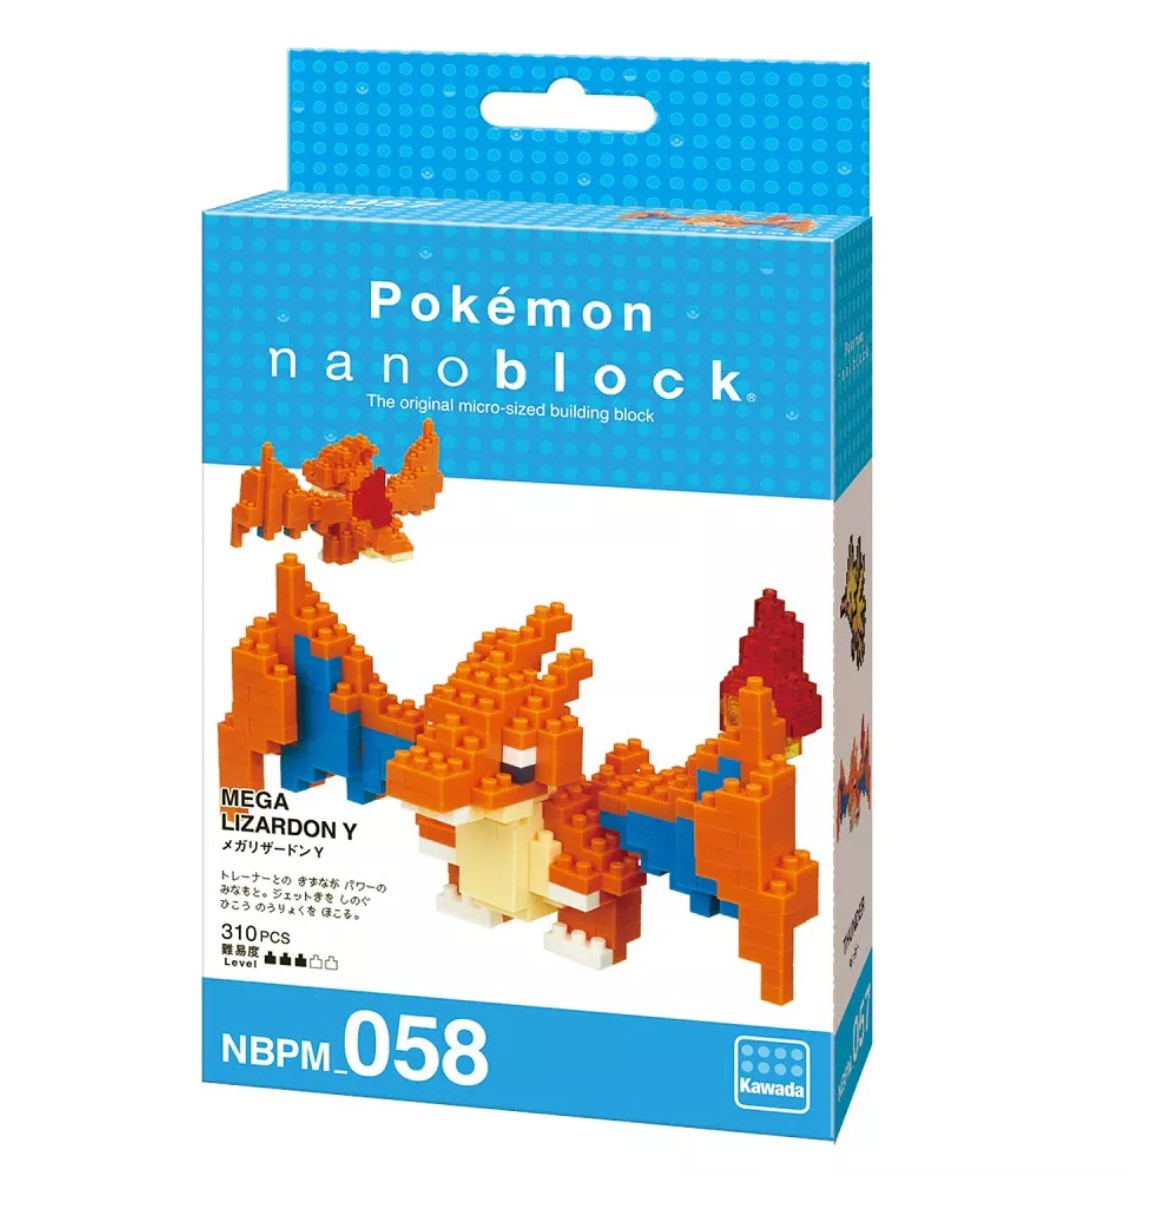 nanoblock - Pokemon - Mega Charizard, Pokemon Series Building Kit